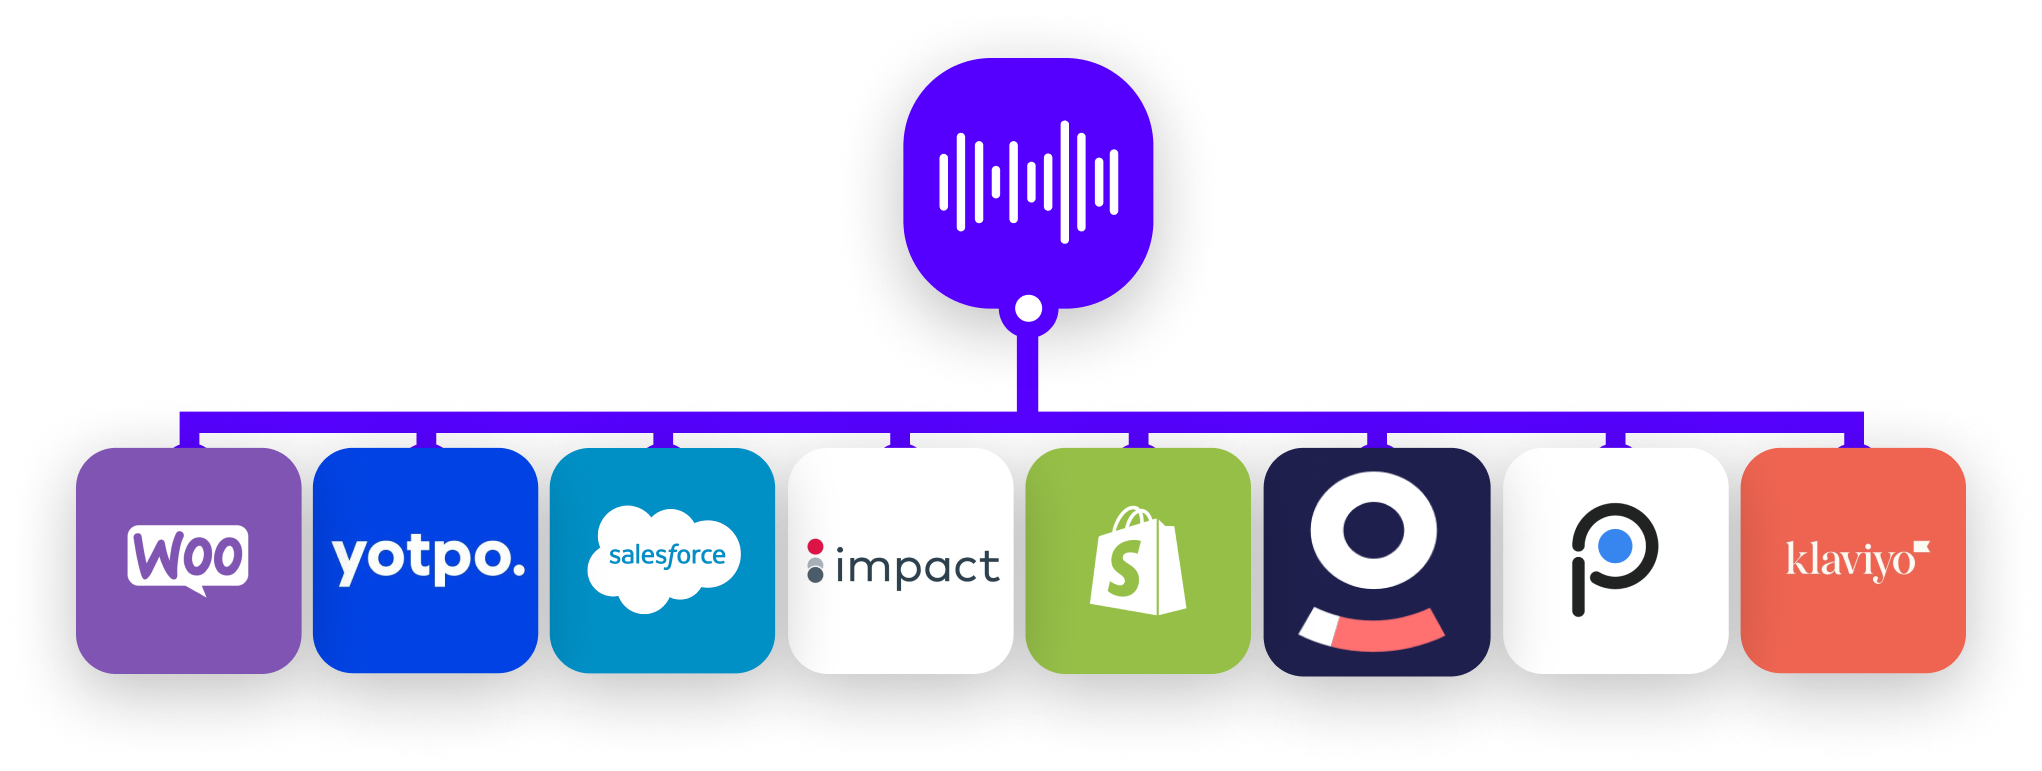 Integrate LoudCrowd with
WooCommerce
Yotpo
salesforce
Impact
Shopify 
Ometria
Partnerize
Klaviyo